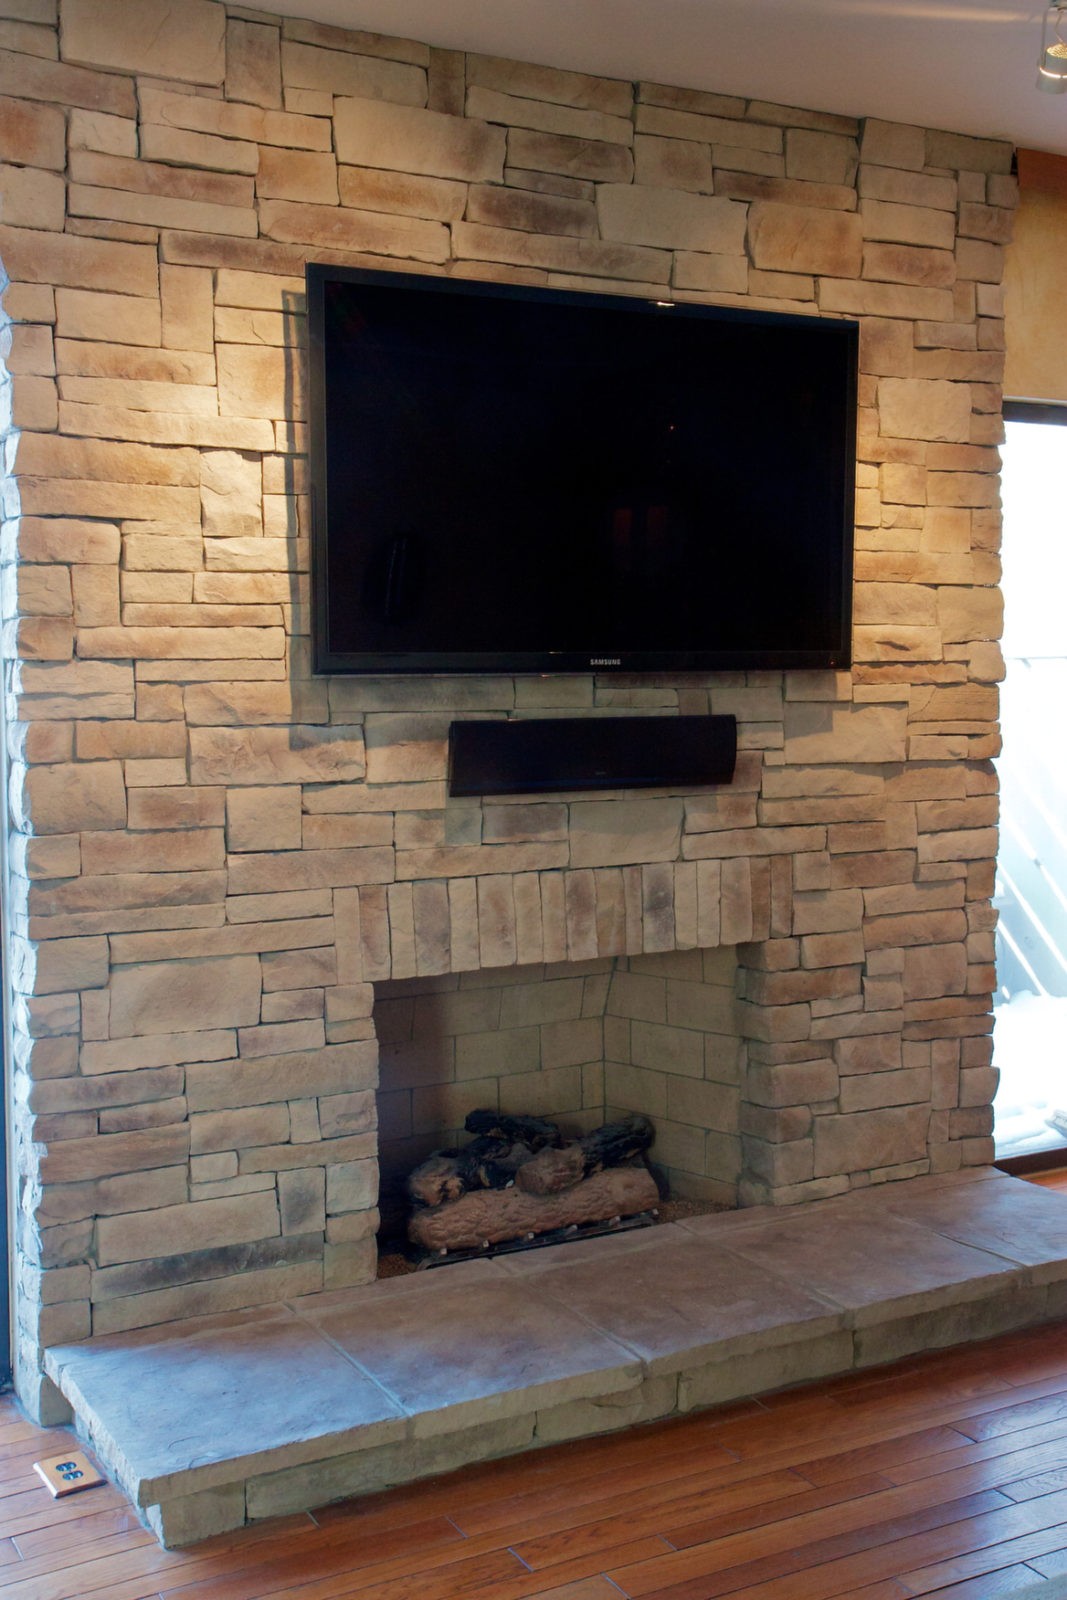 Tan mountain ledgestone dry stack veneer fireplace with a TV